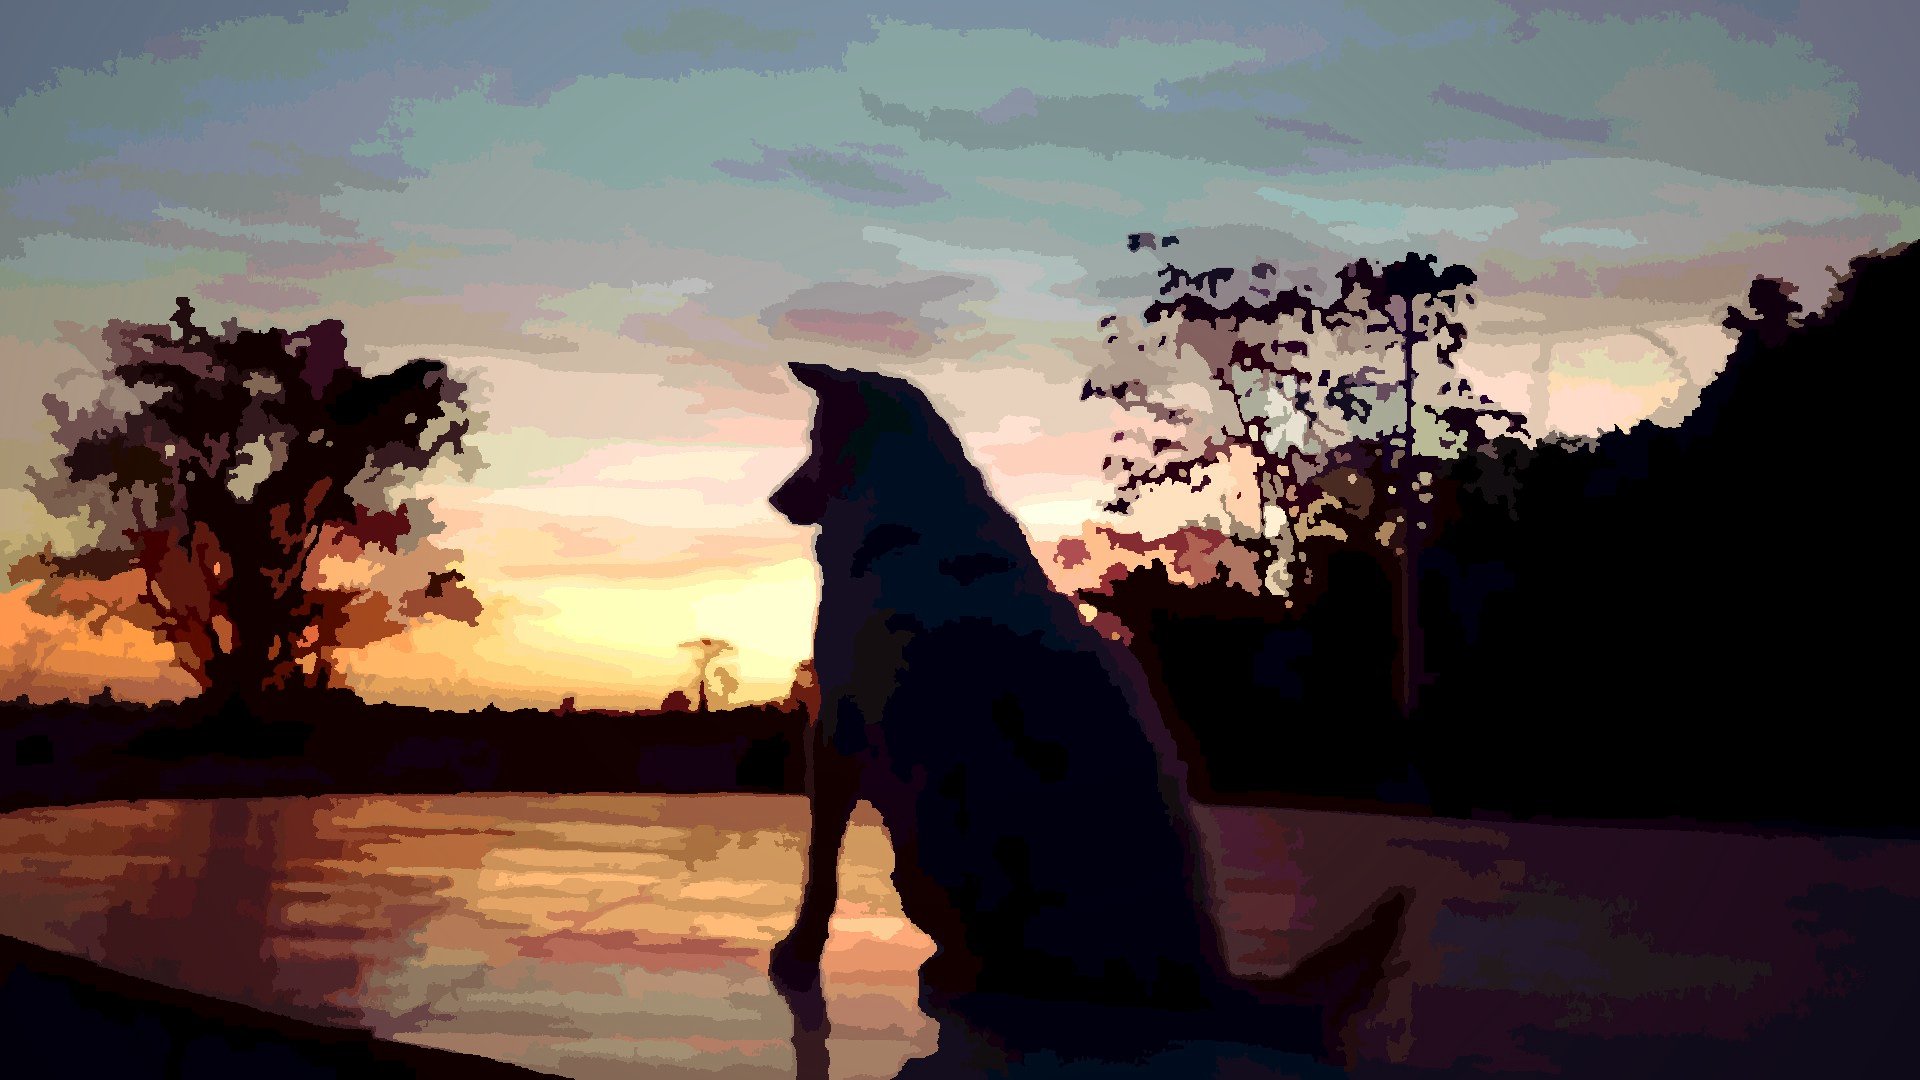 A dog at dawn